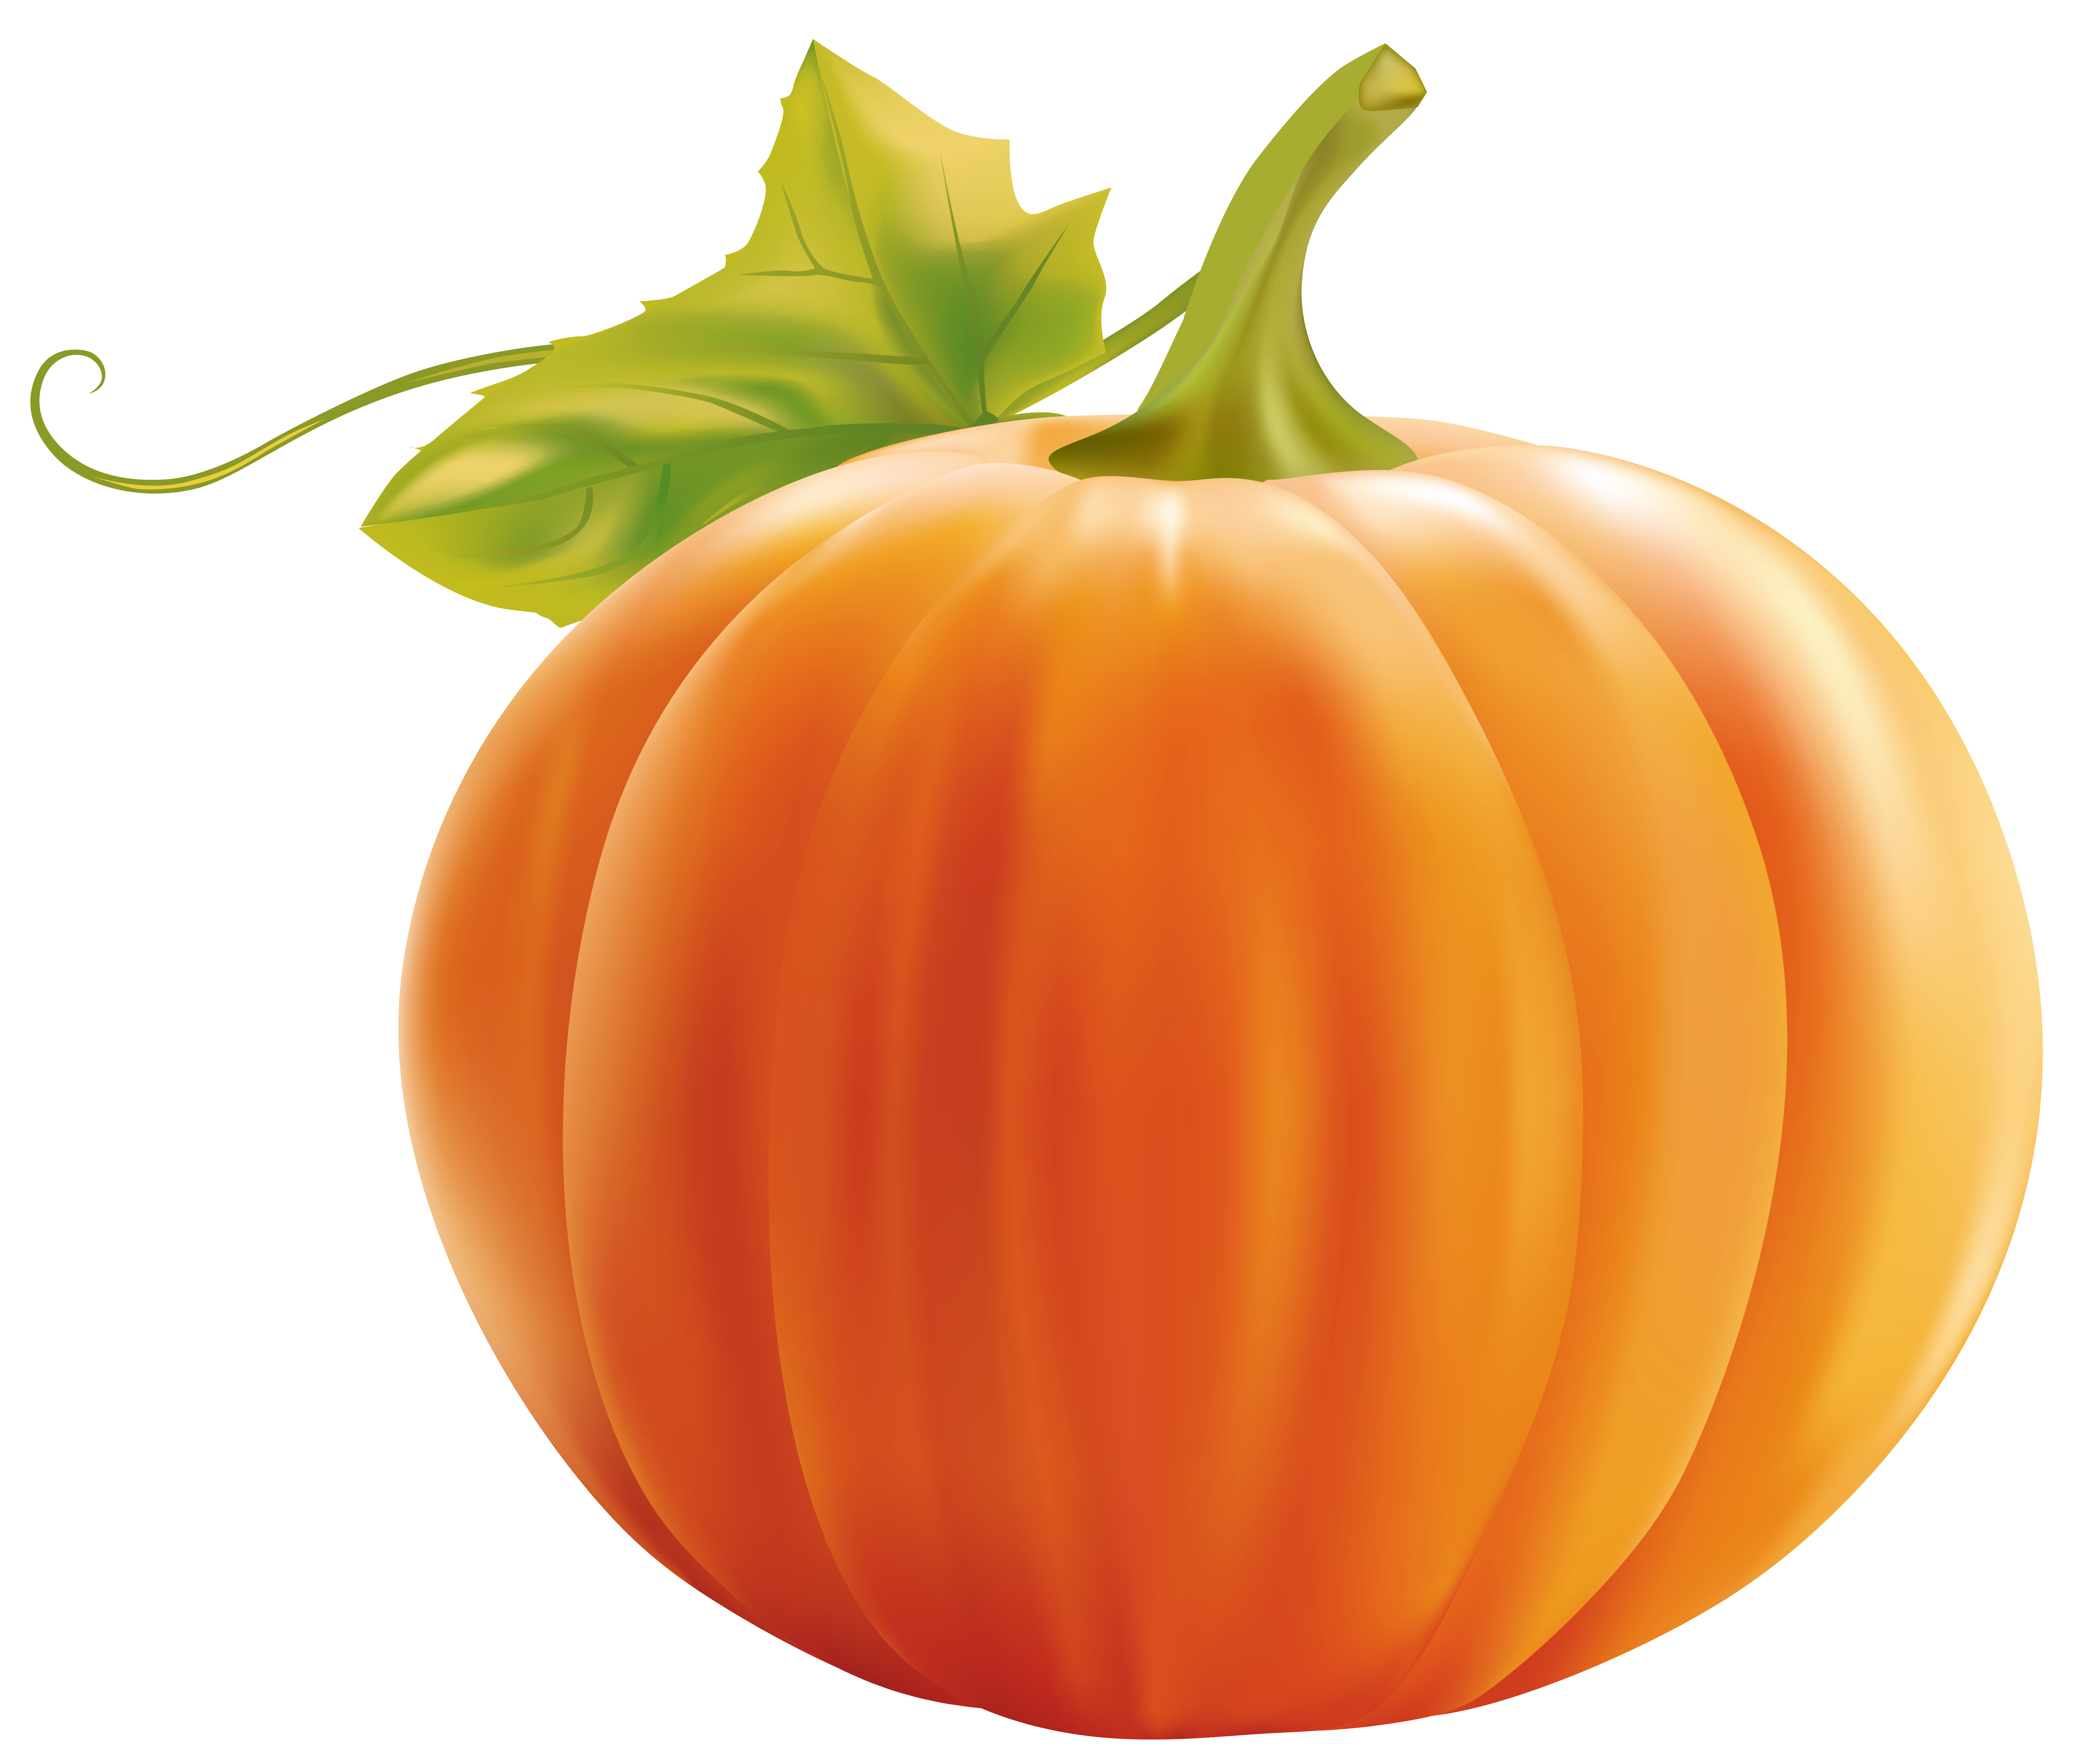 Pumpkin clipart image